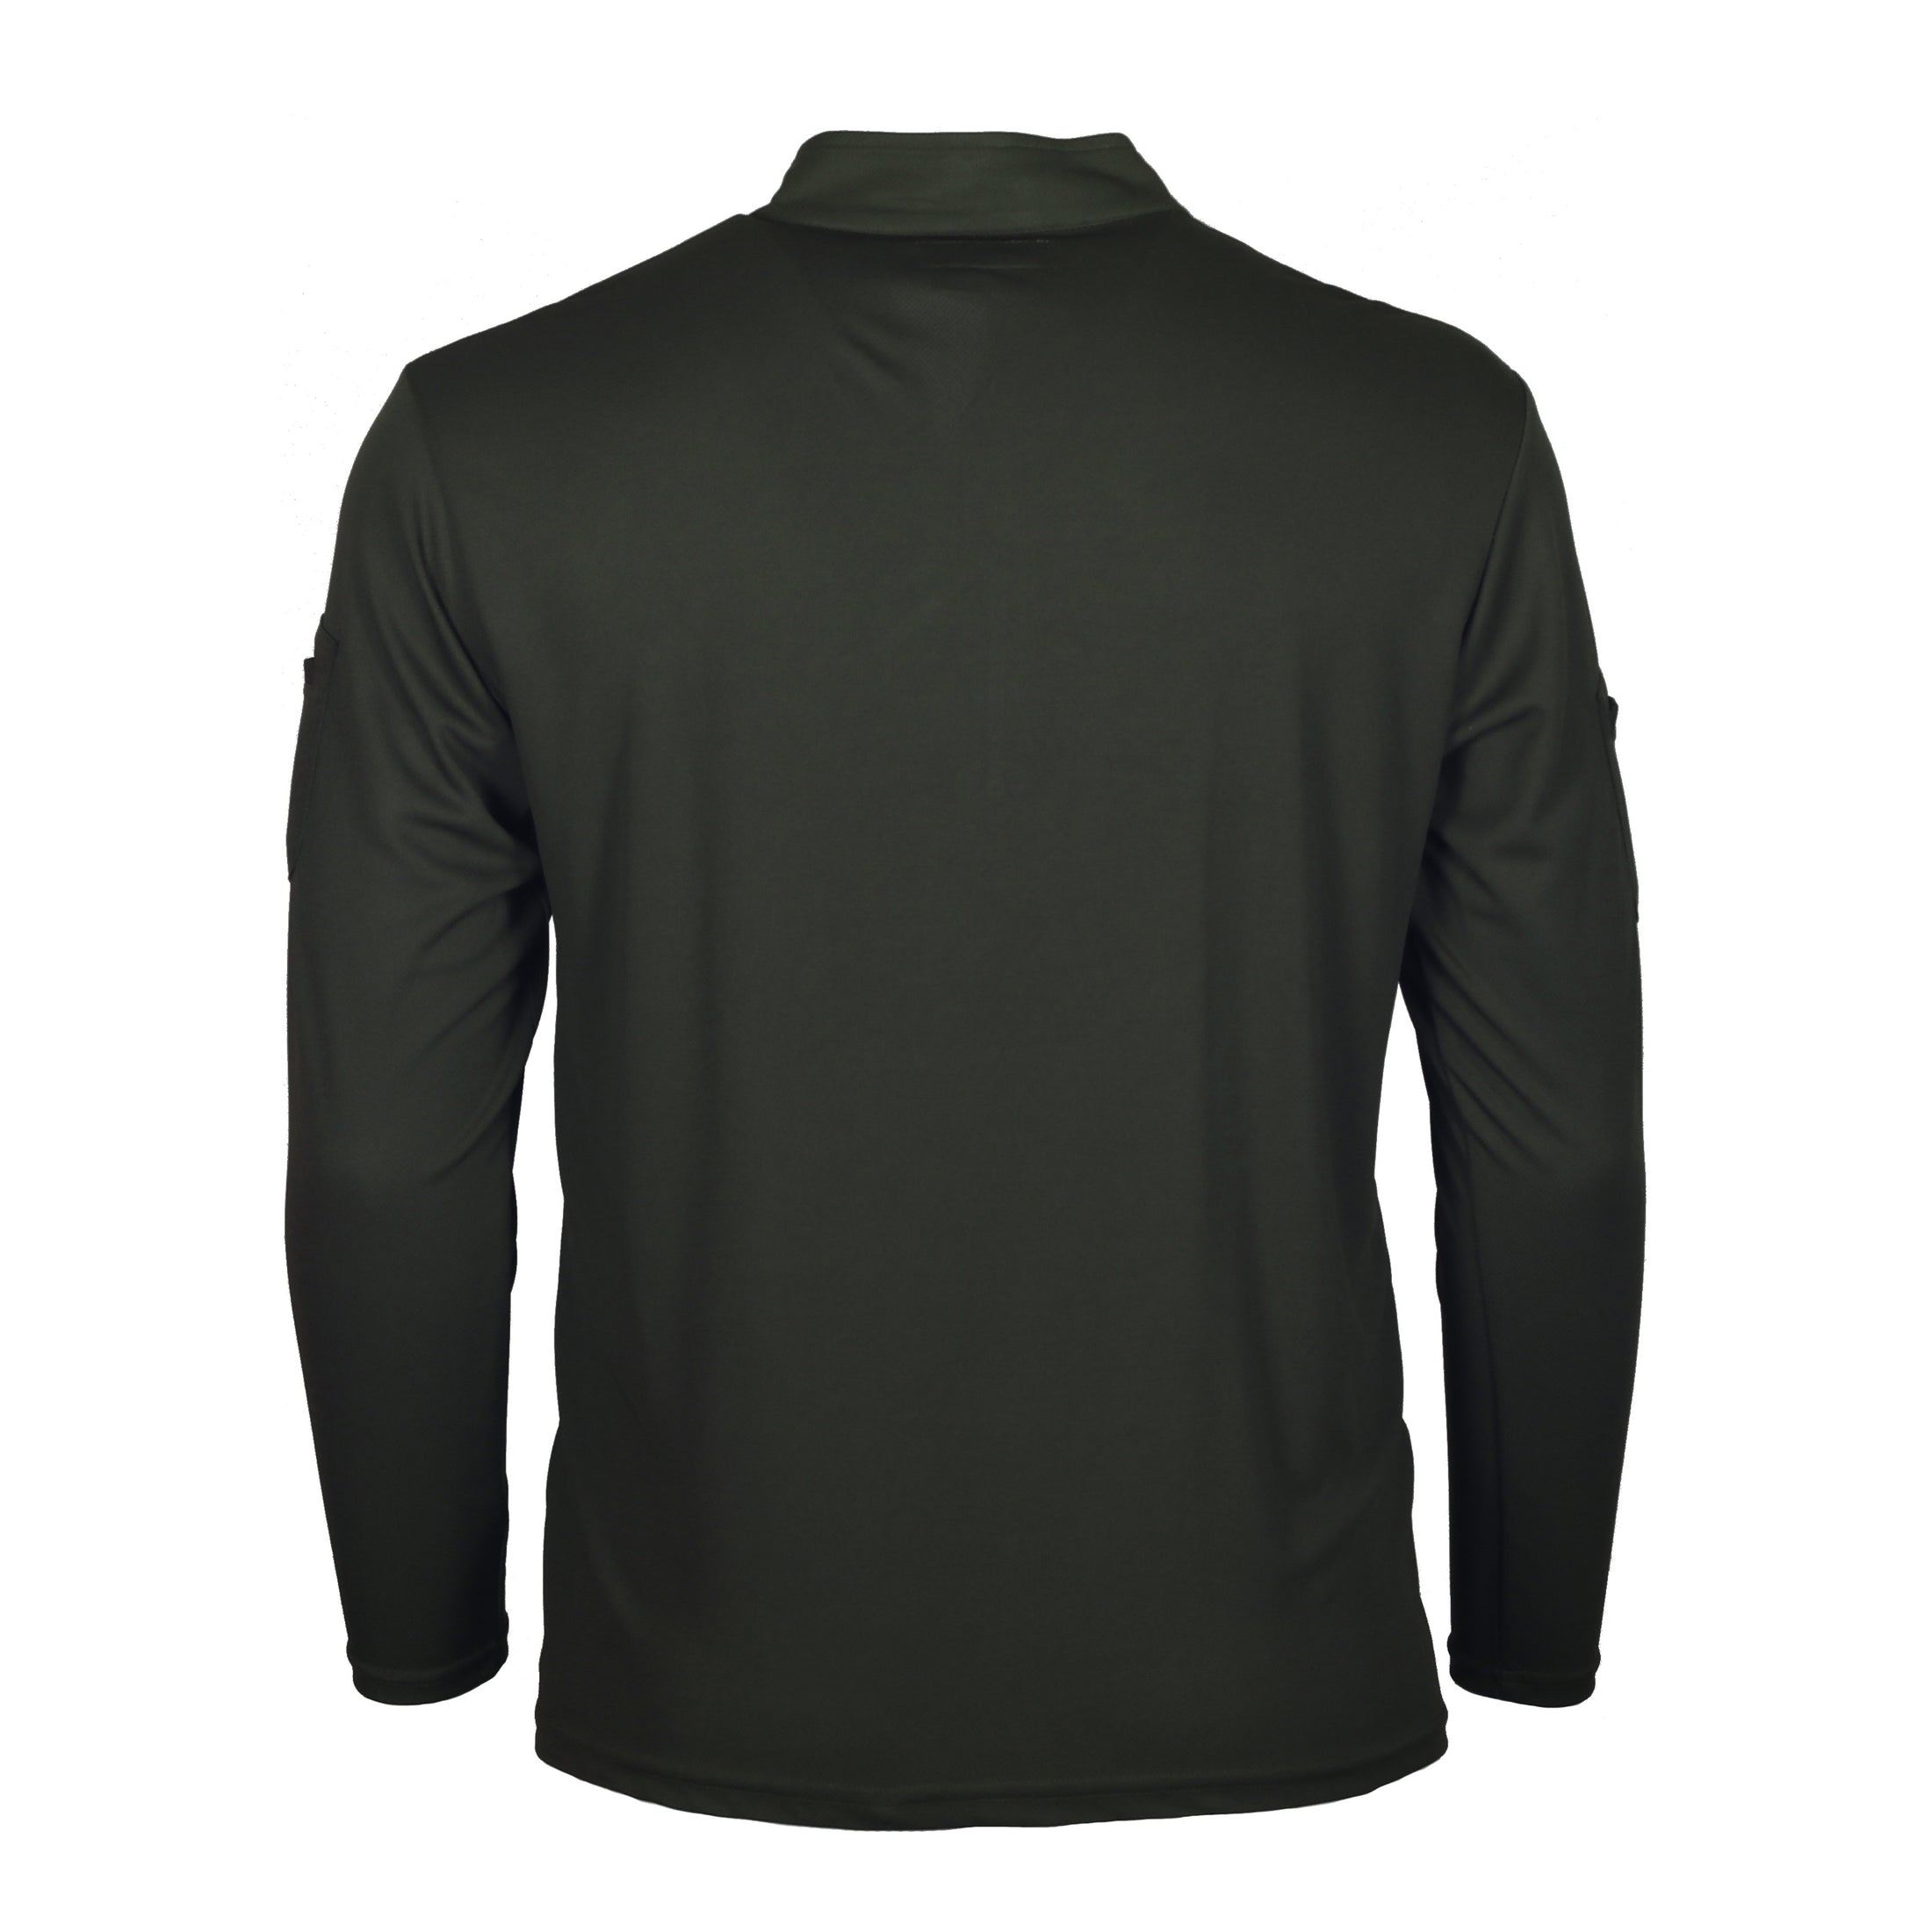 gamehide ElimiTick Tactical Style Quarter Zip Long Sleeve Shirt back (loden)